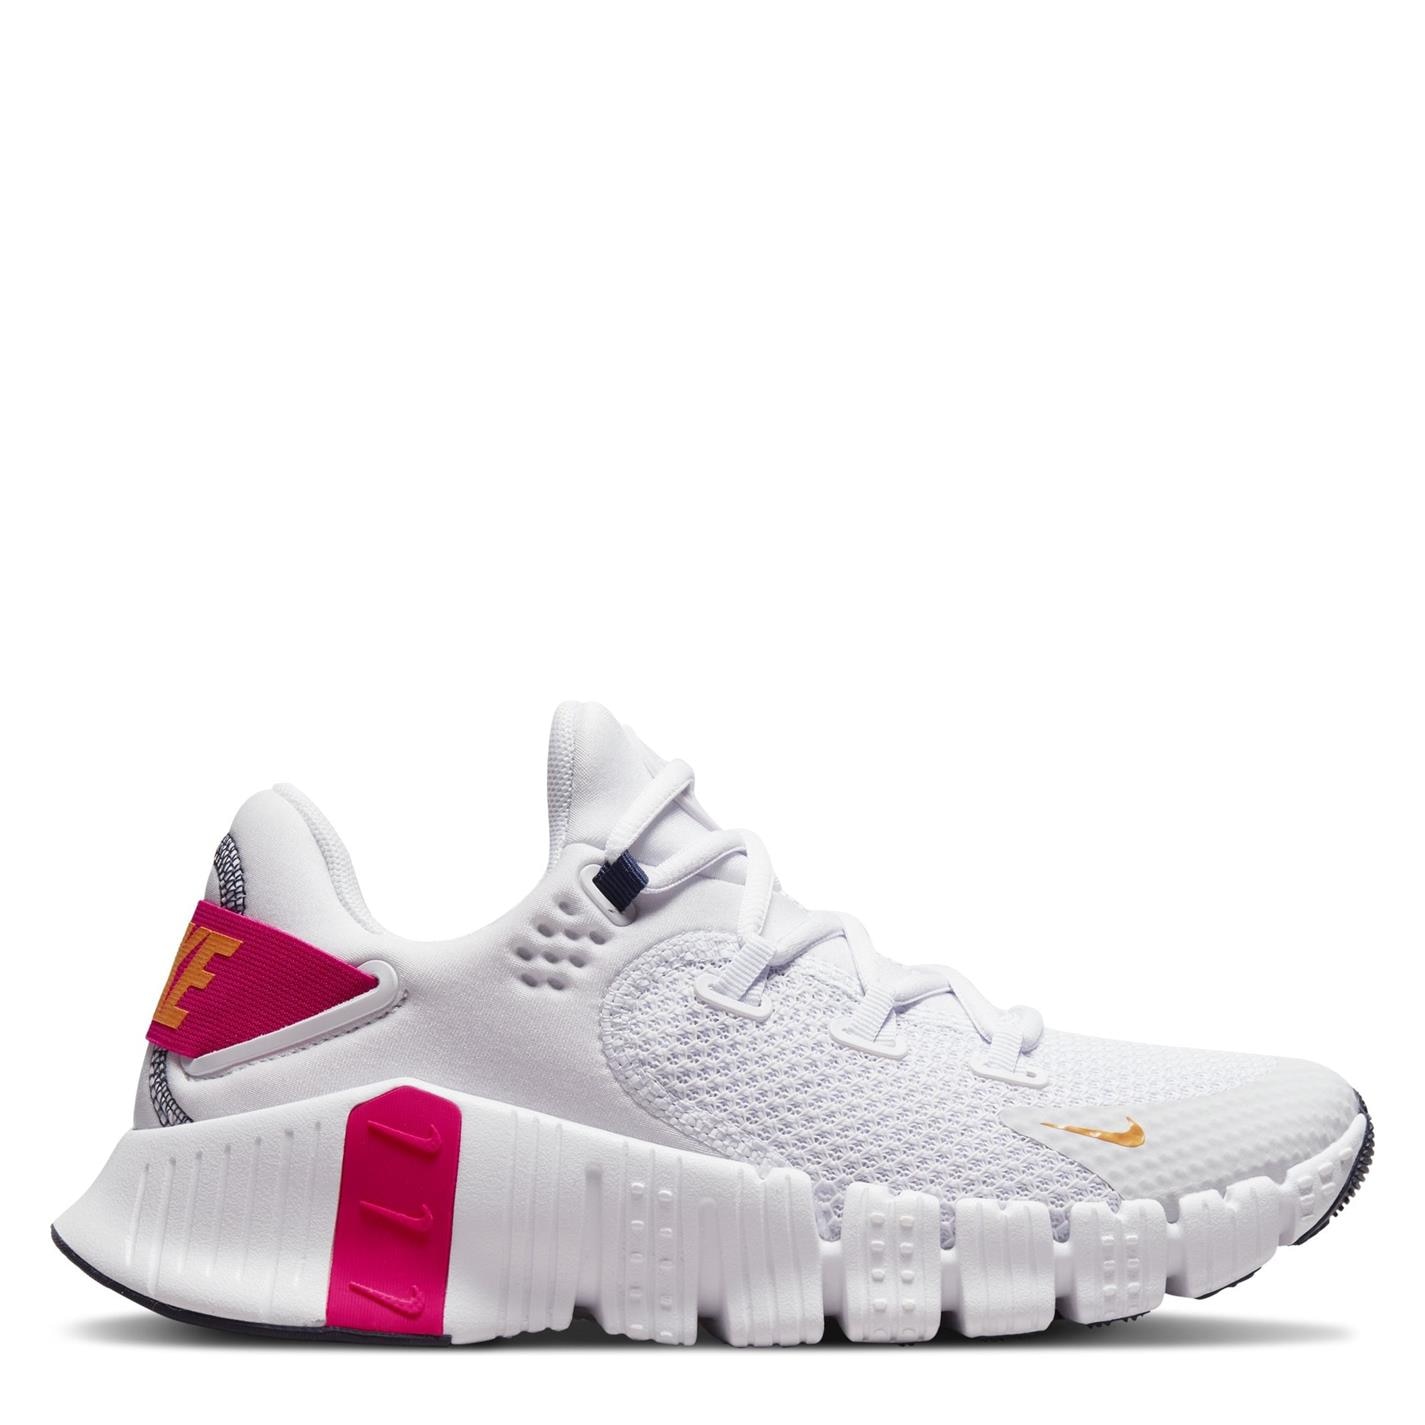 Adidasi sport Nike Free Metcon 4 pentru femei lt mov roz